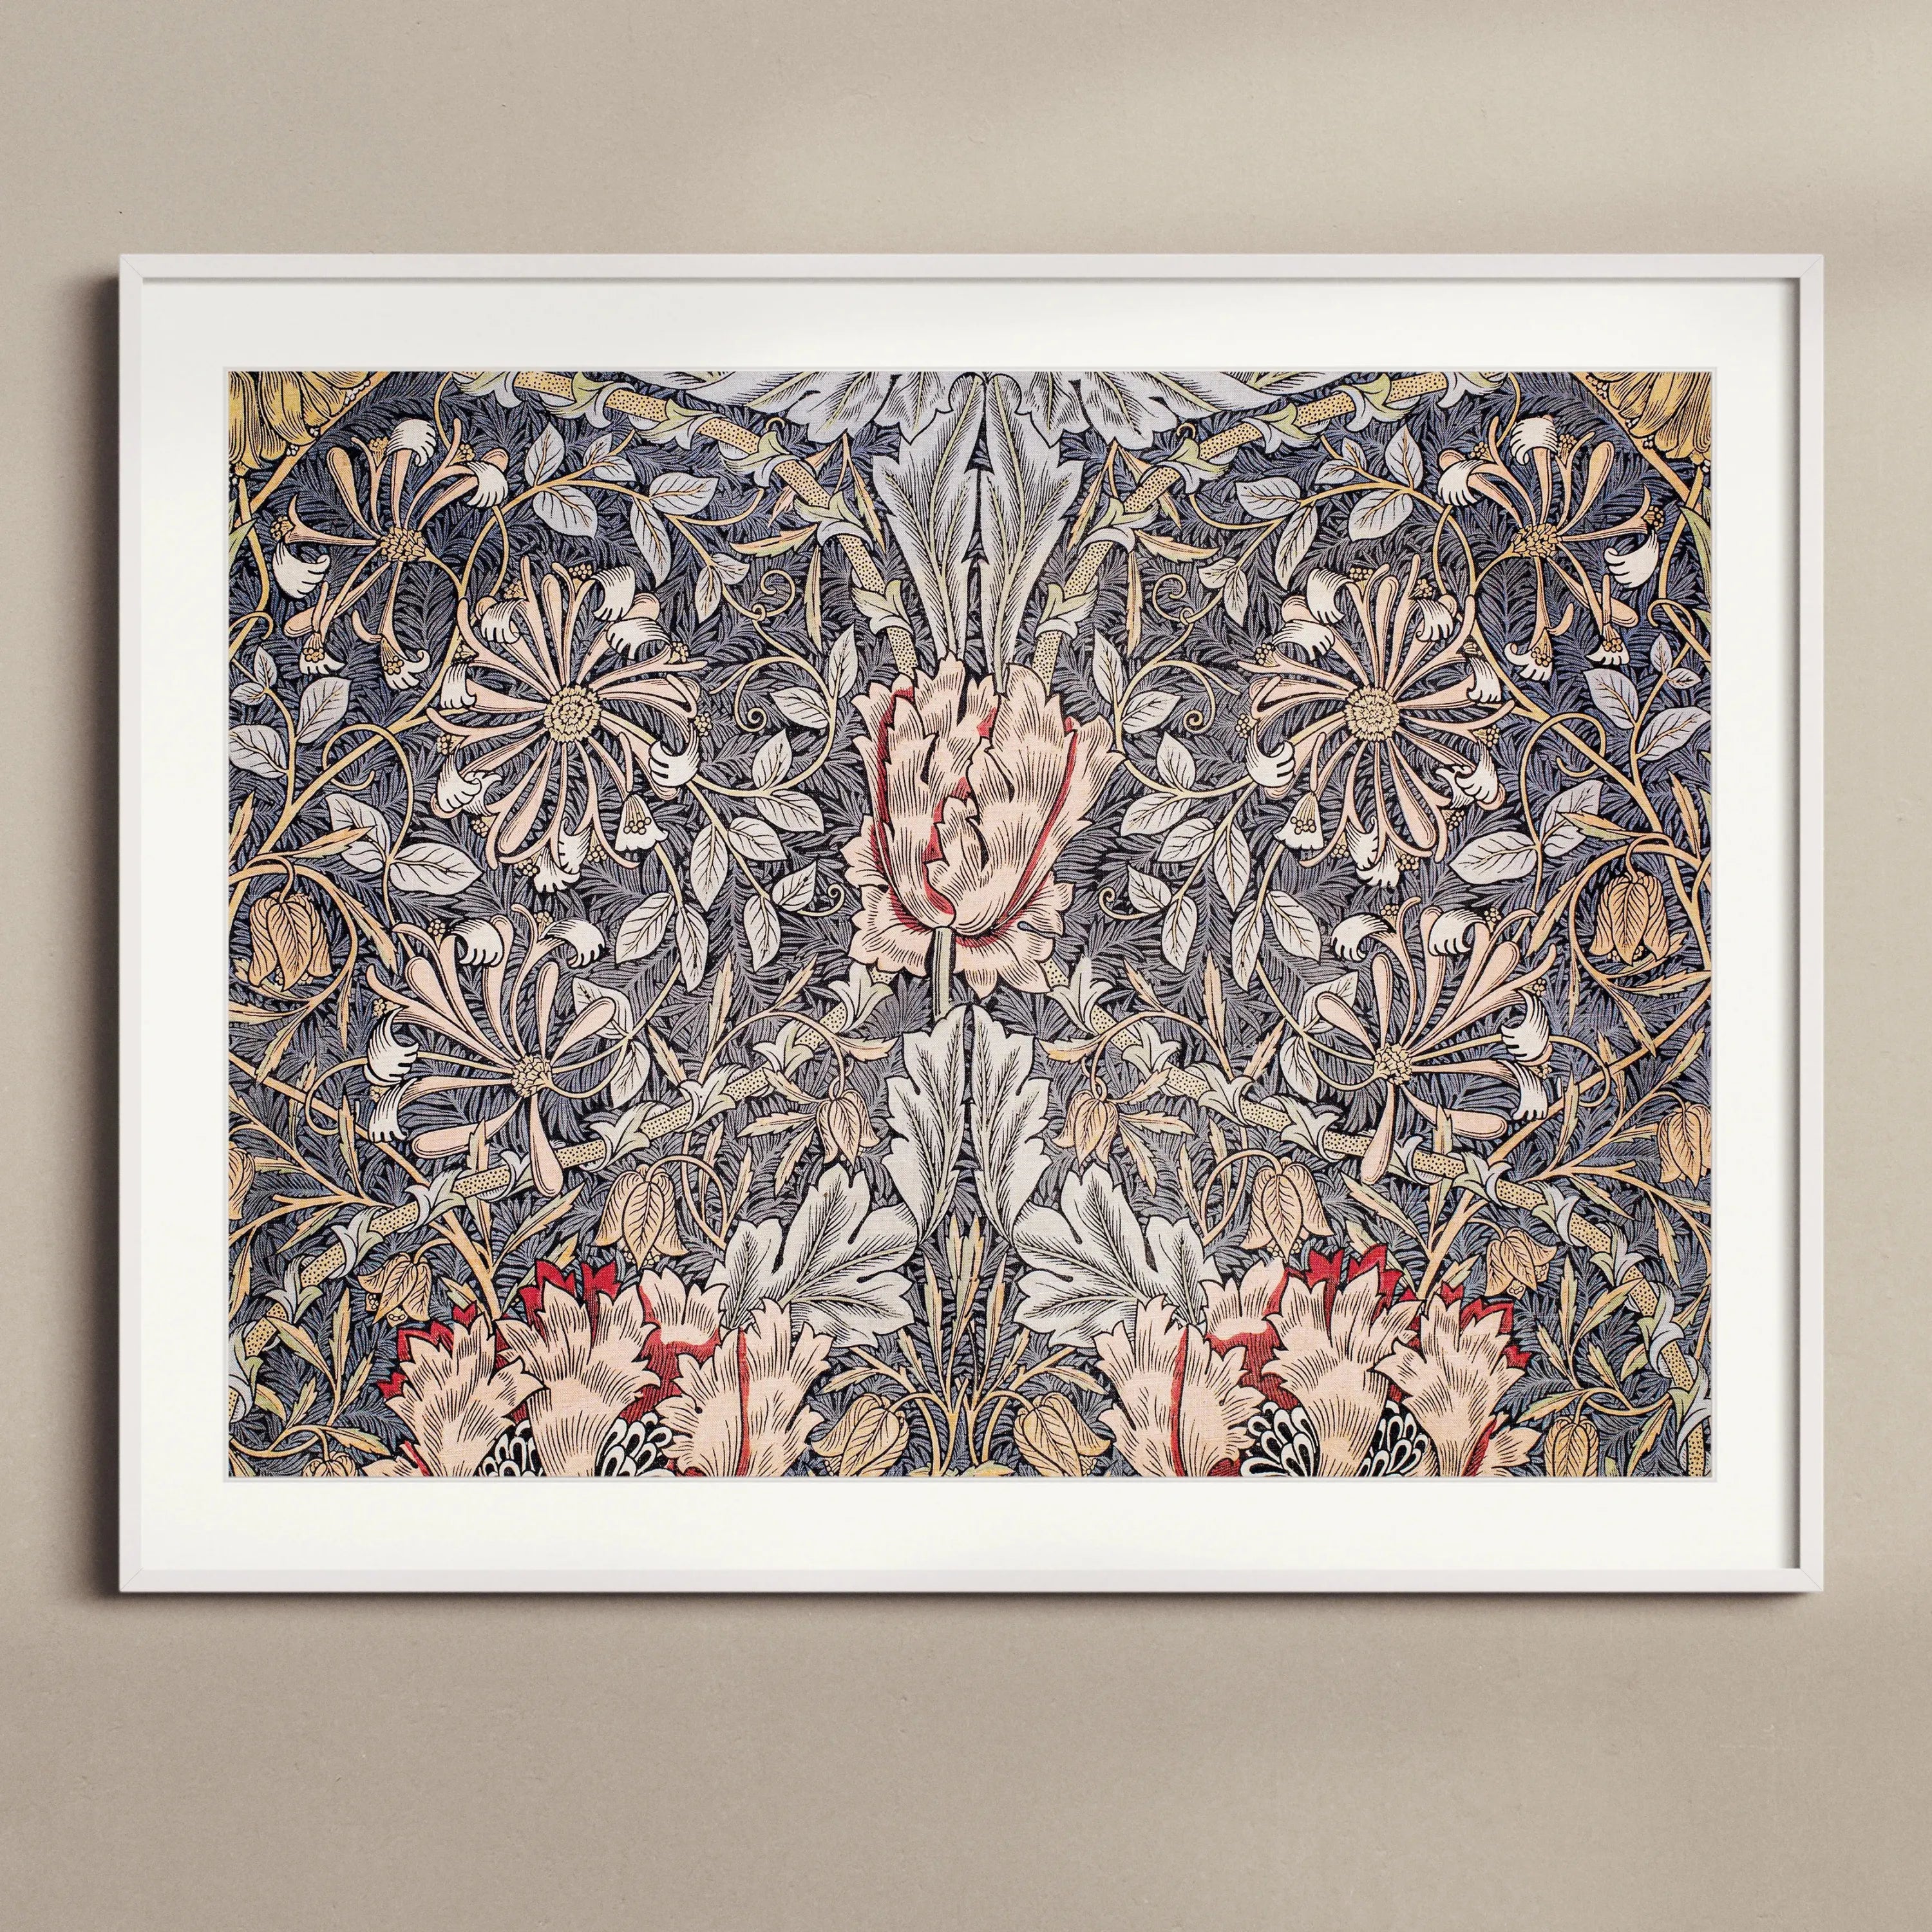 Honeysuckle By William Morris Framed & Mounted Print - Posters Prints & Visual Artwork - Aesthetic Art